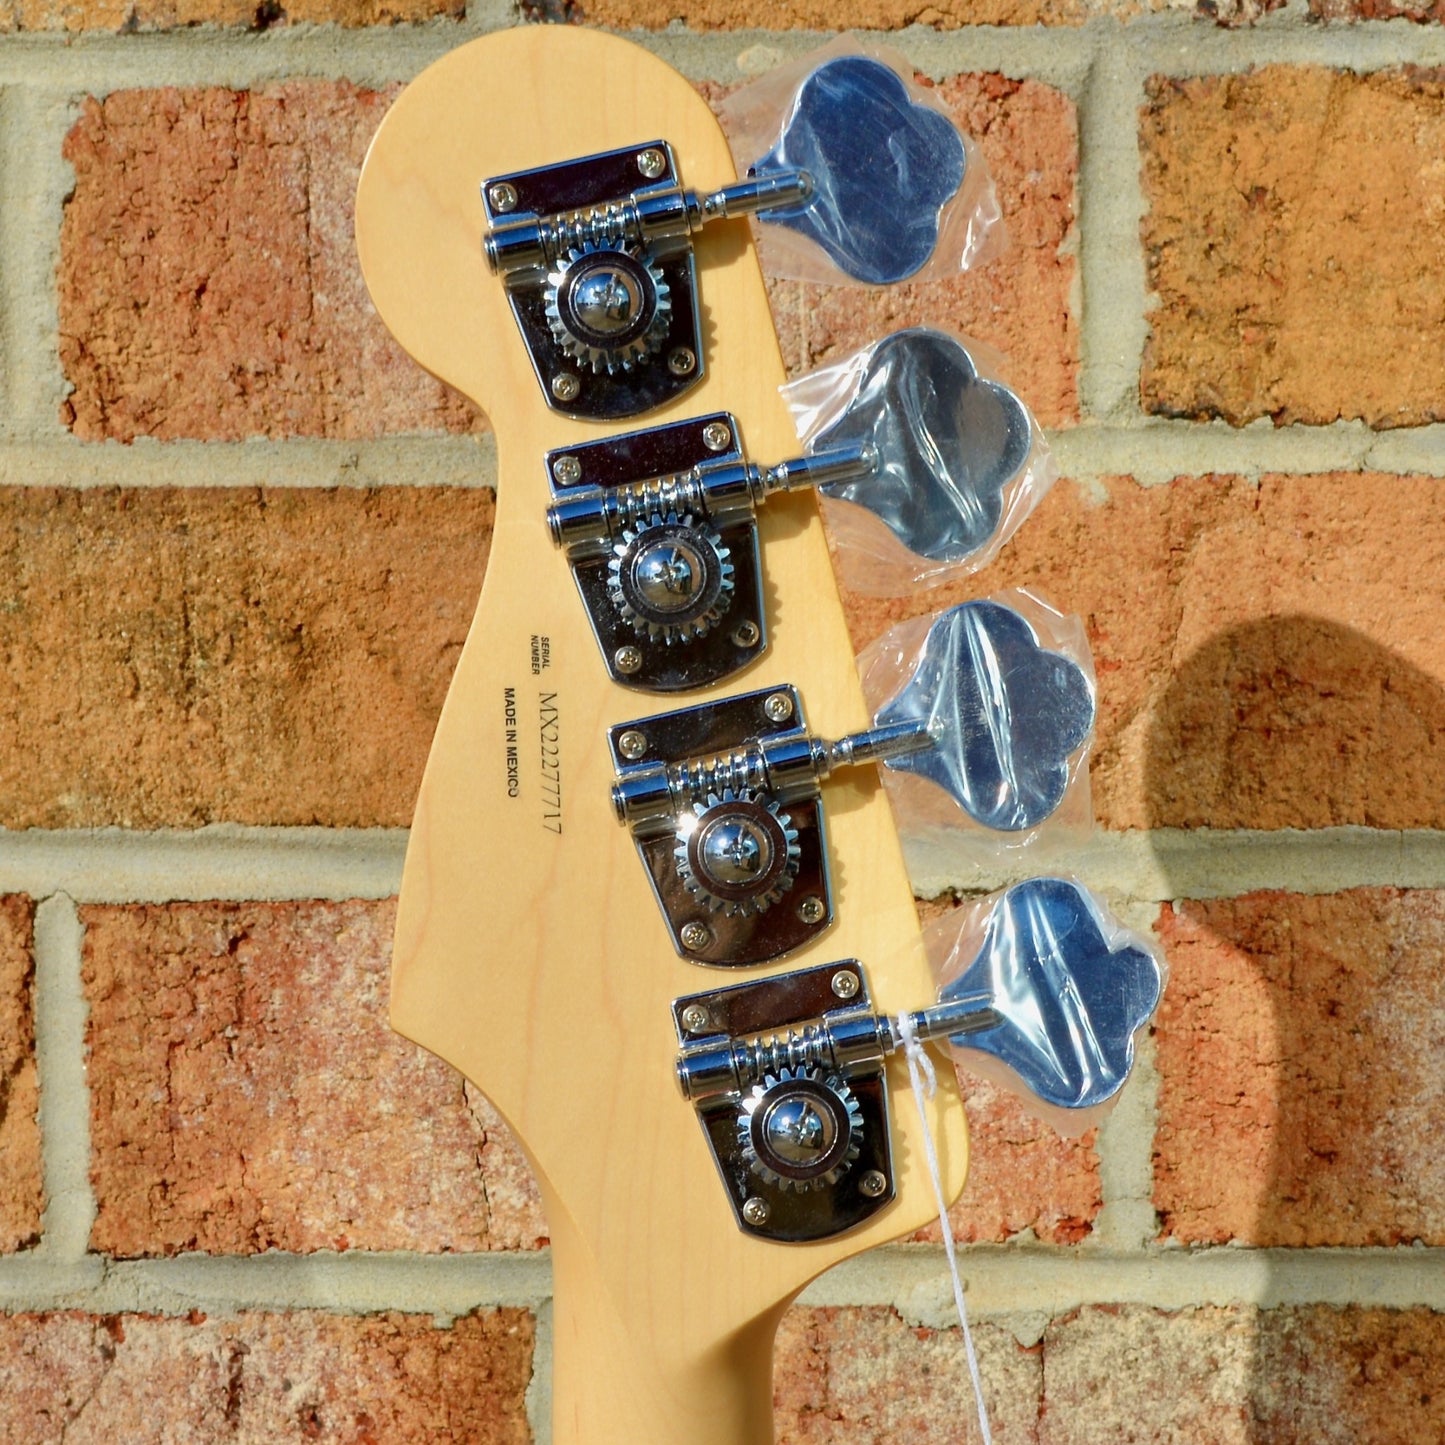 Fender Player Jaguar® Bass, Maple Fingerboard, Silver